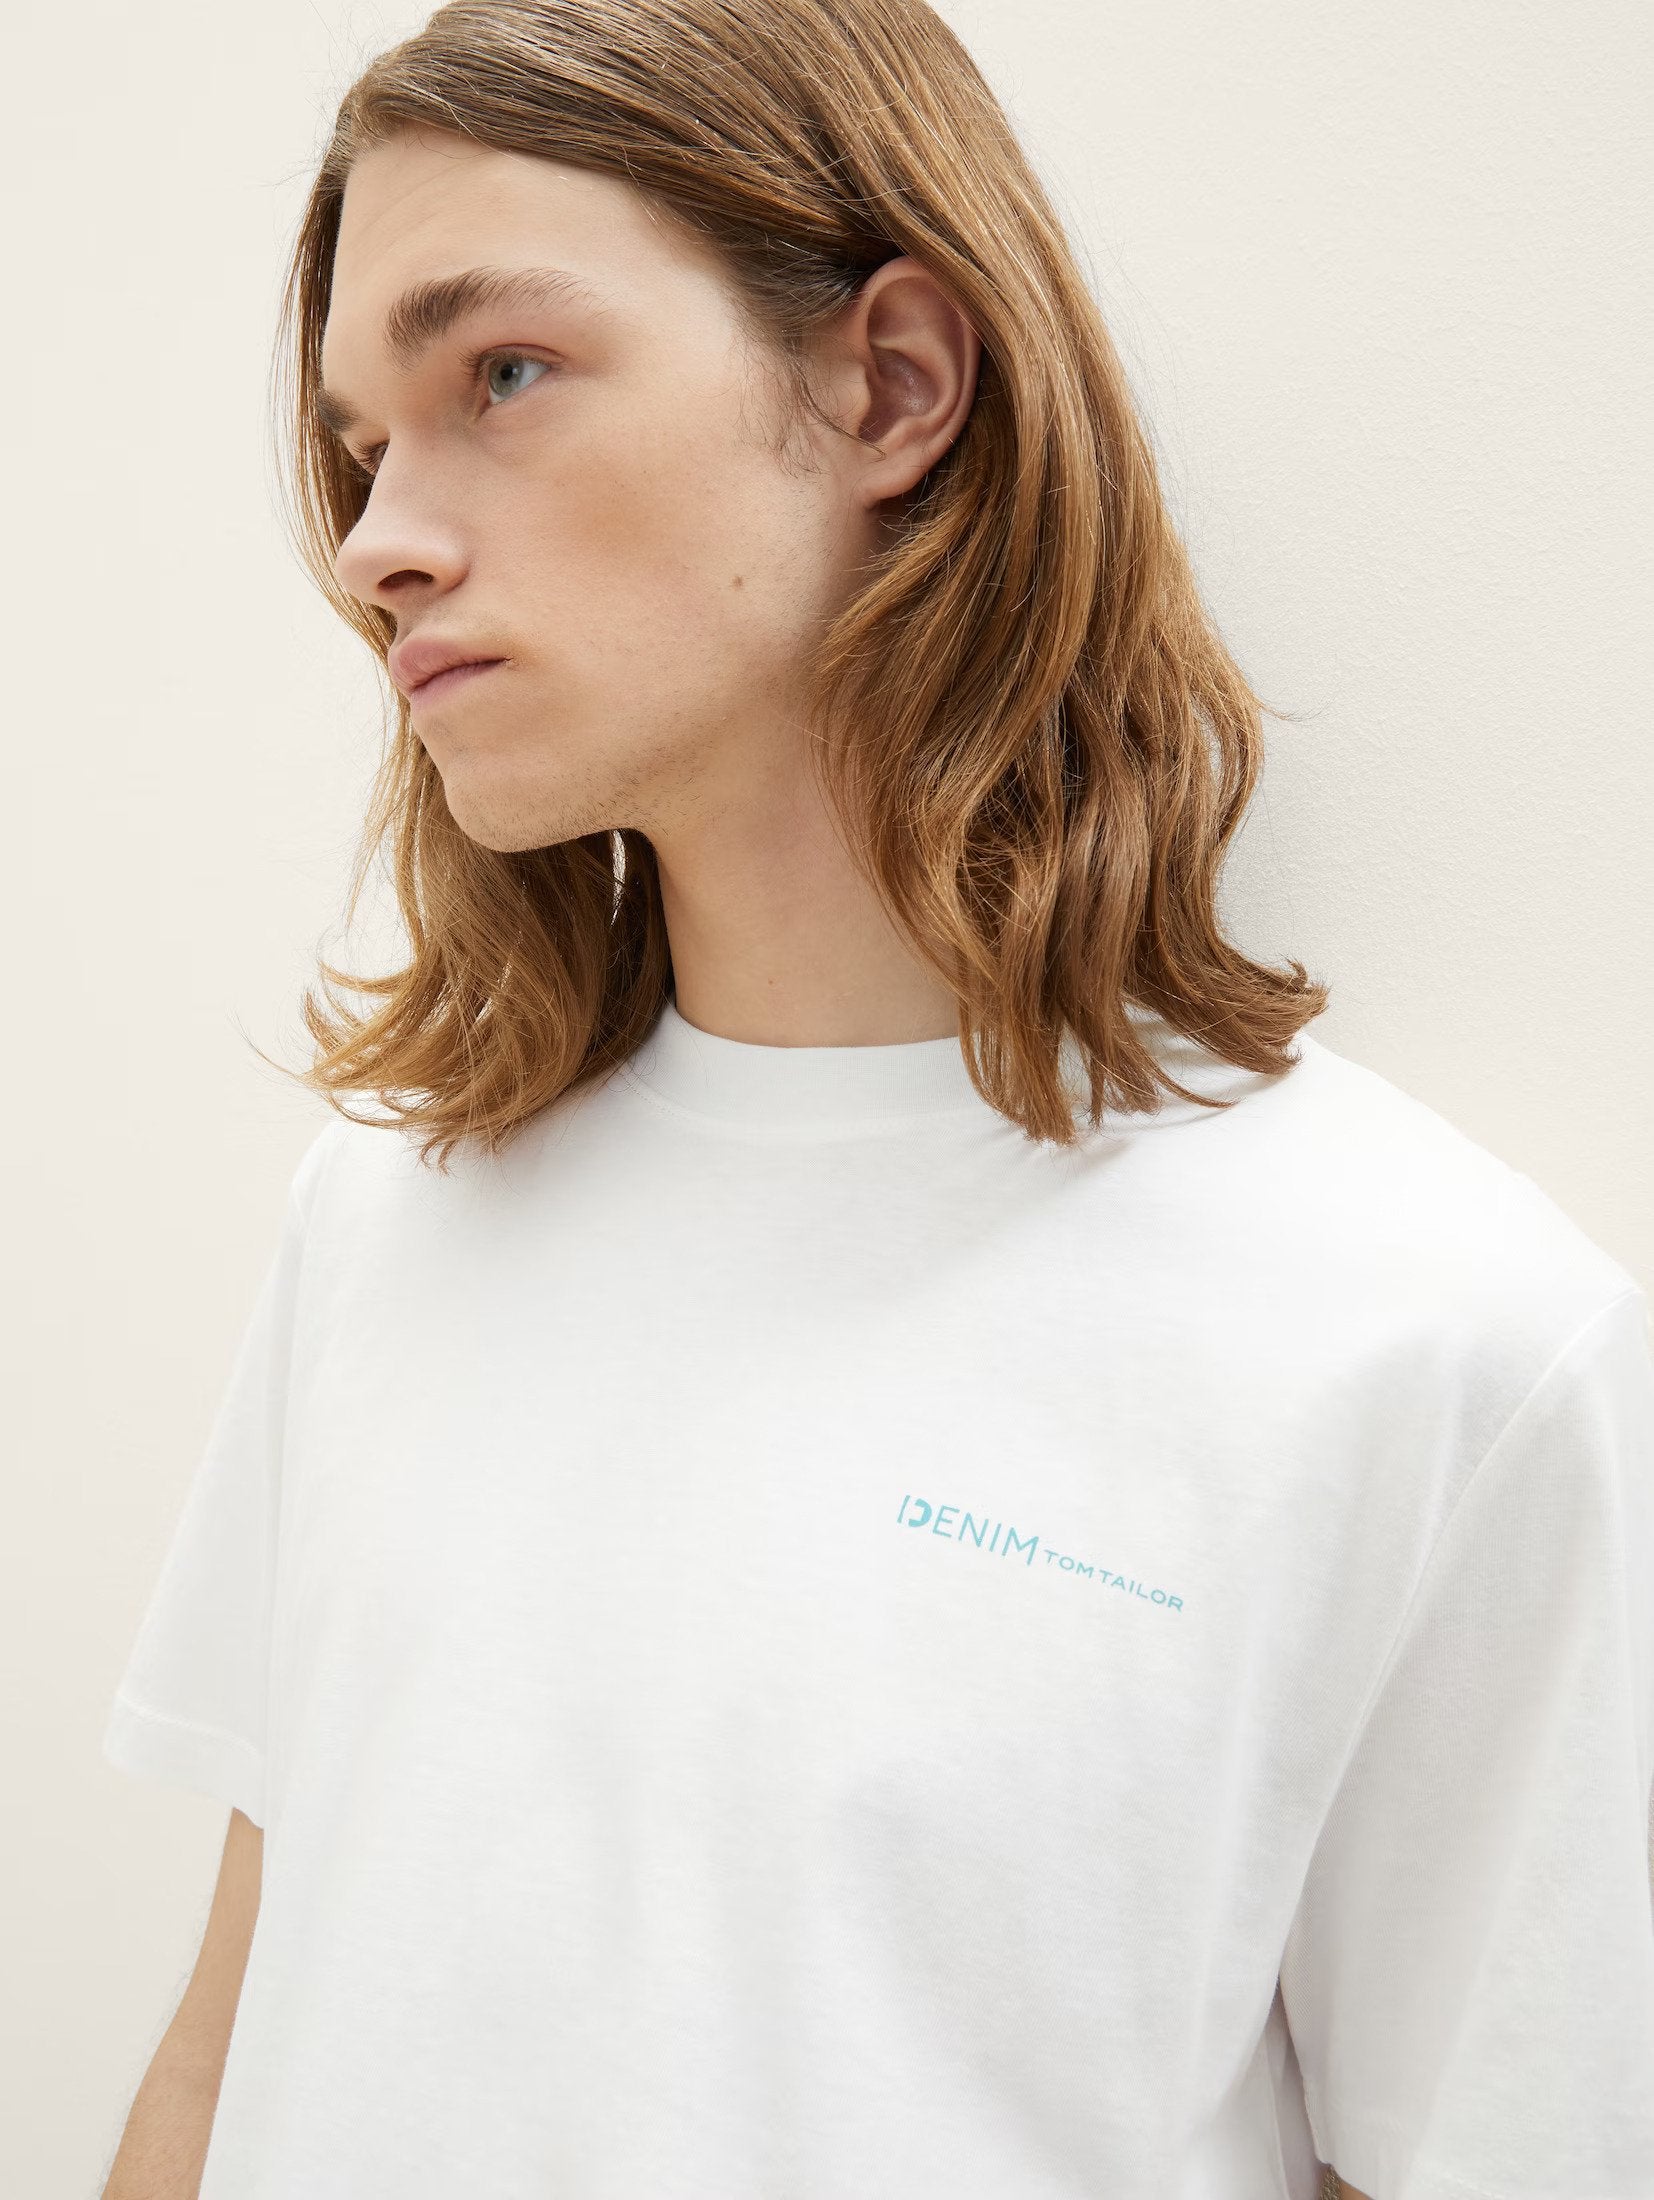 Tom Tailor White T-shirt With Back Unique Design